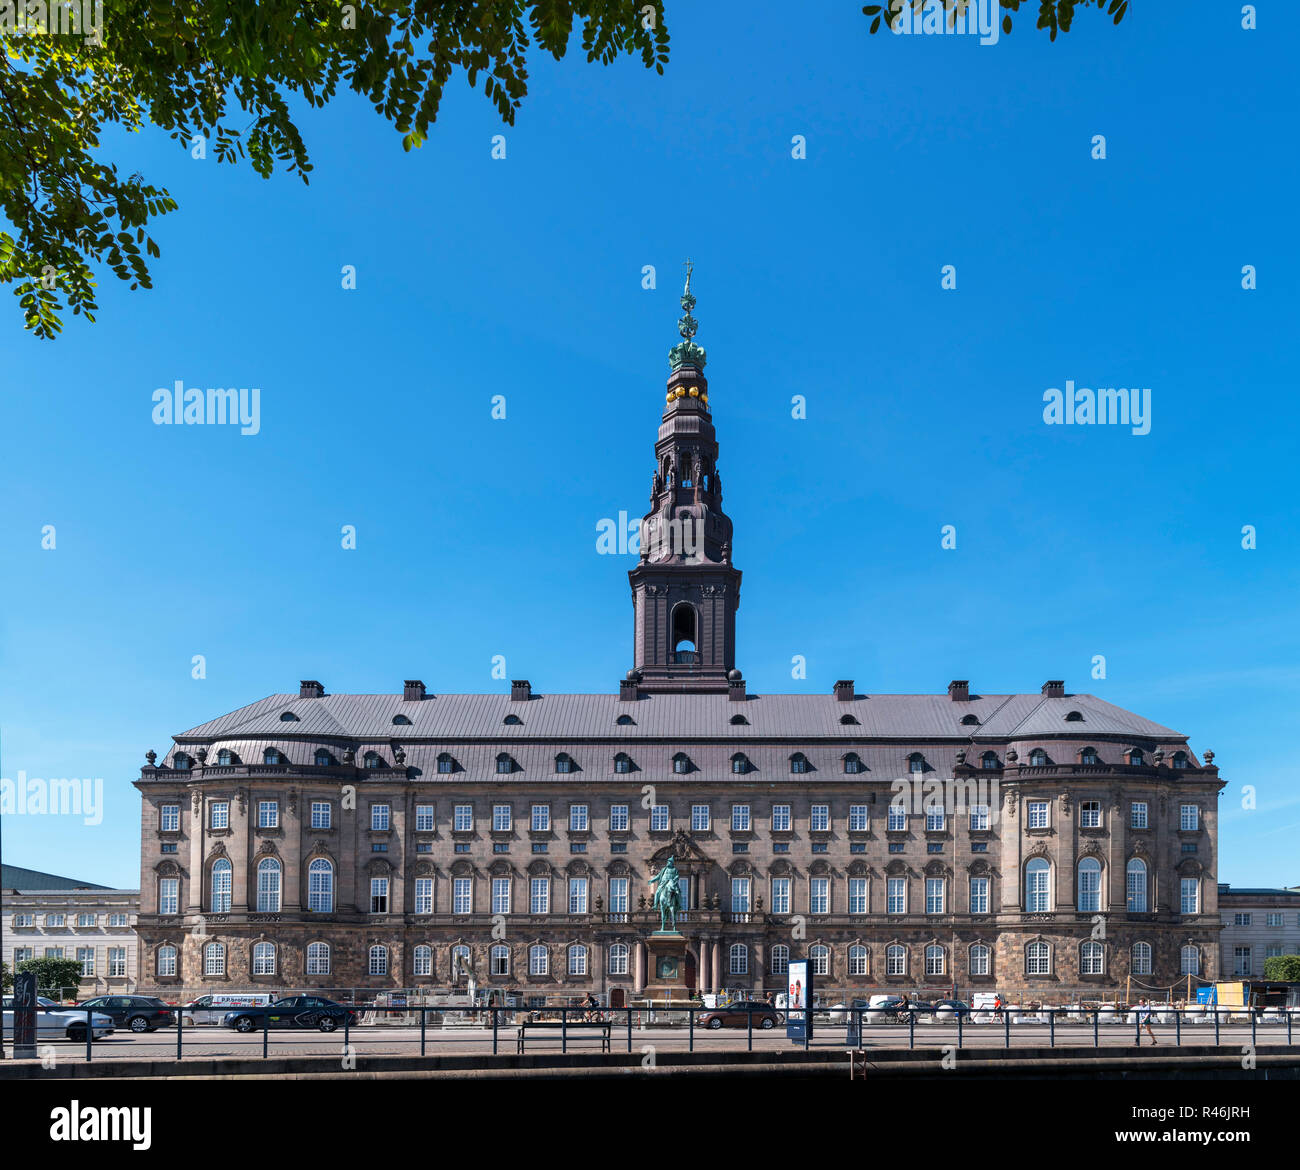 Vor Christiansborg Slot (Schloss Christiansborg), die Heimat des dänischen Parlaments (folketinget), Slotsholmen, Kopenhagen, Dänemark Stockfoto